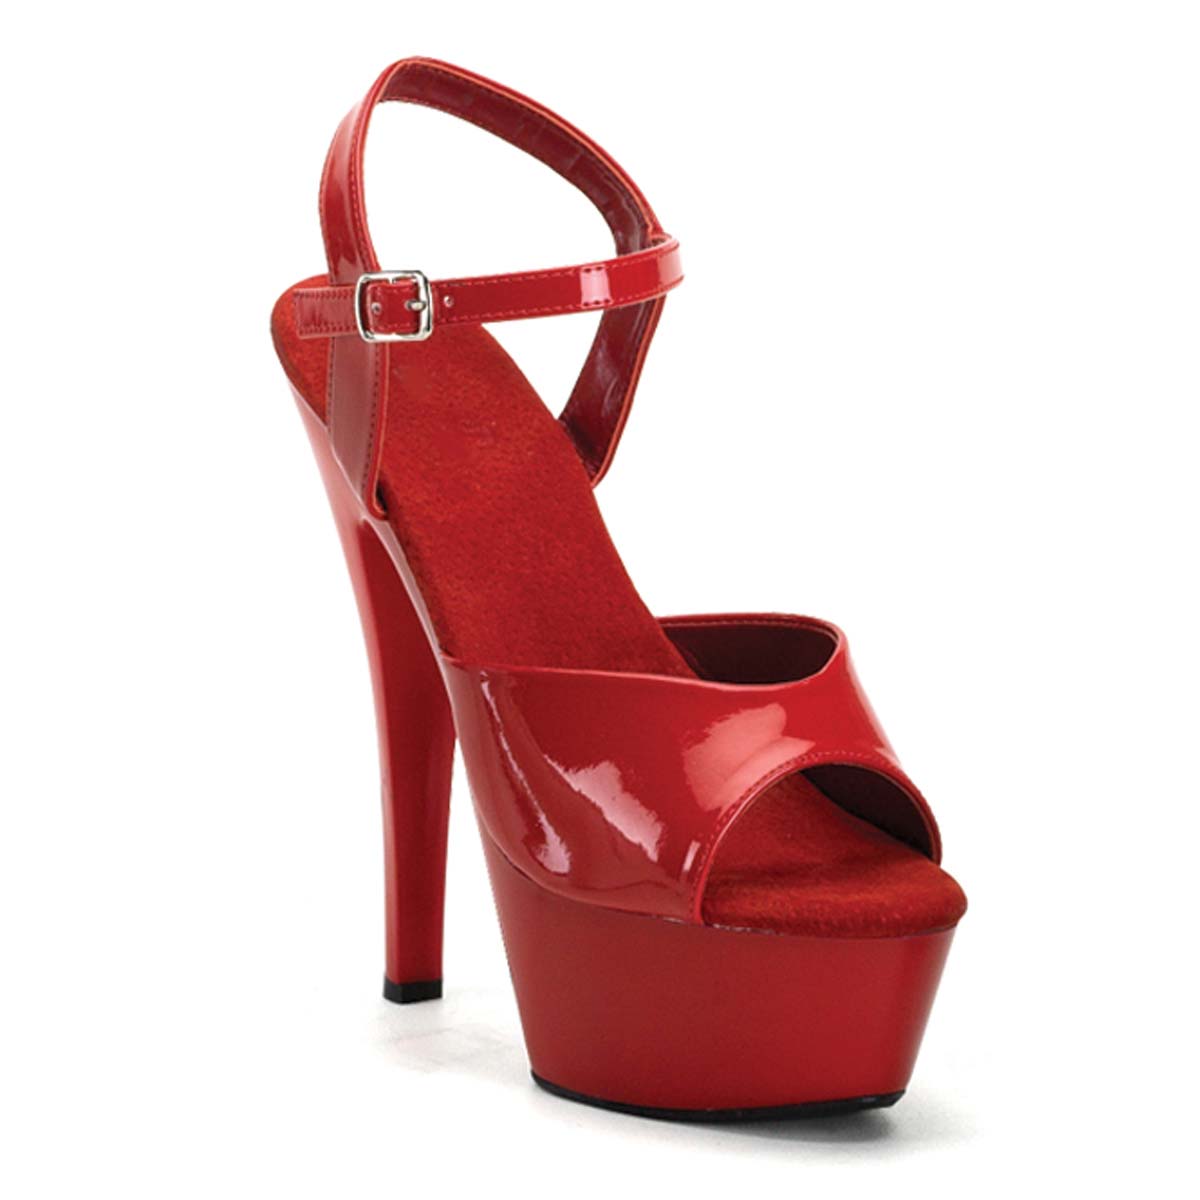 Pleaser Funtasma Juliet-209 - Red Patent in Heels & Platforms - $48.99